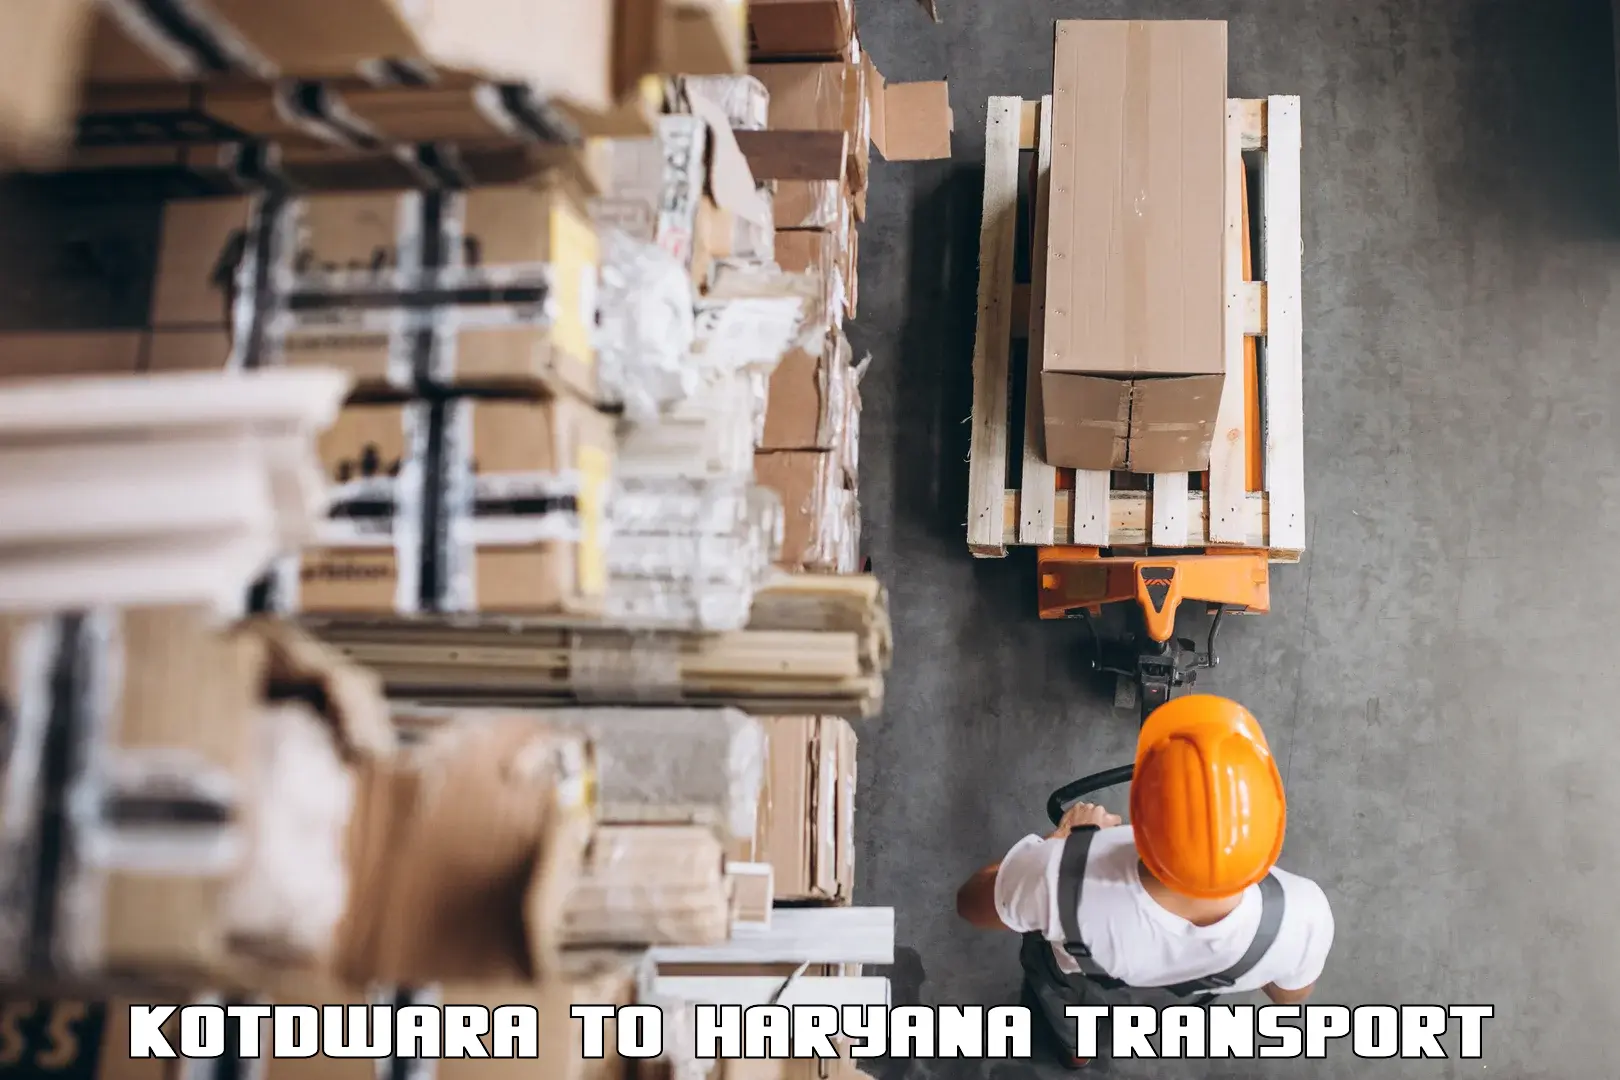 Part load transport service in India Kotdwara to Gohana